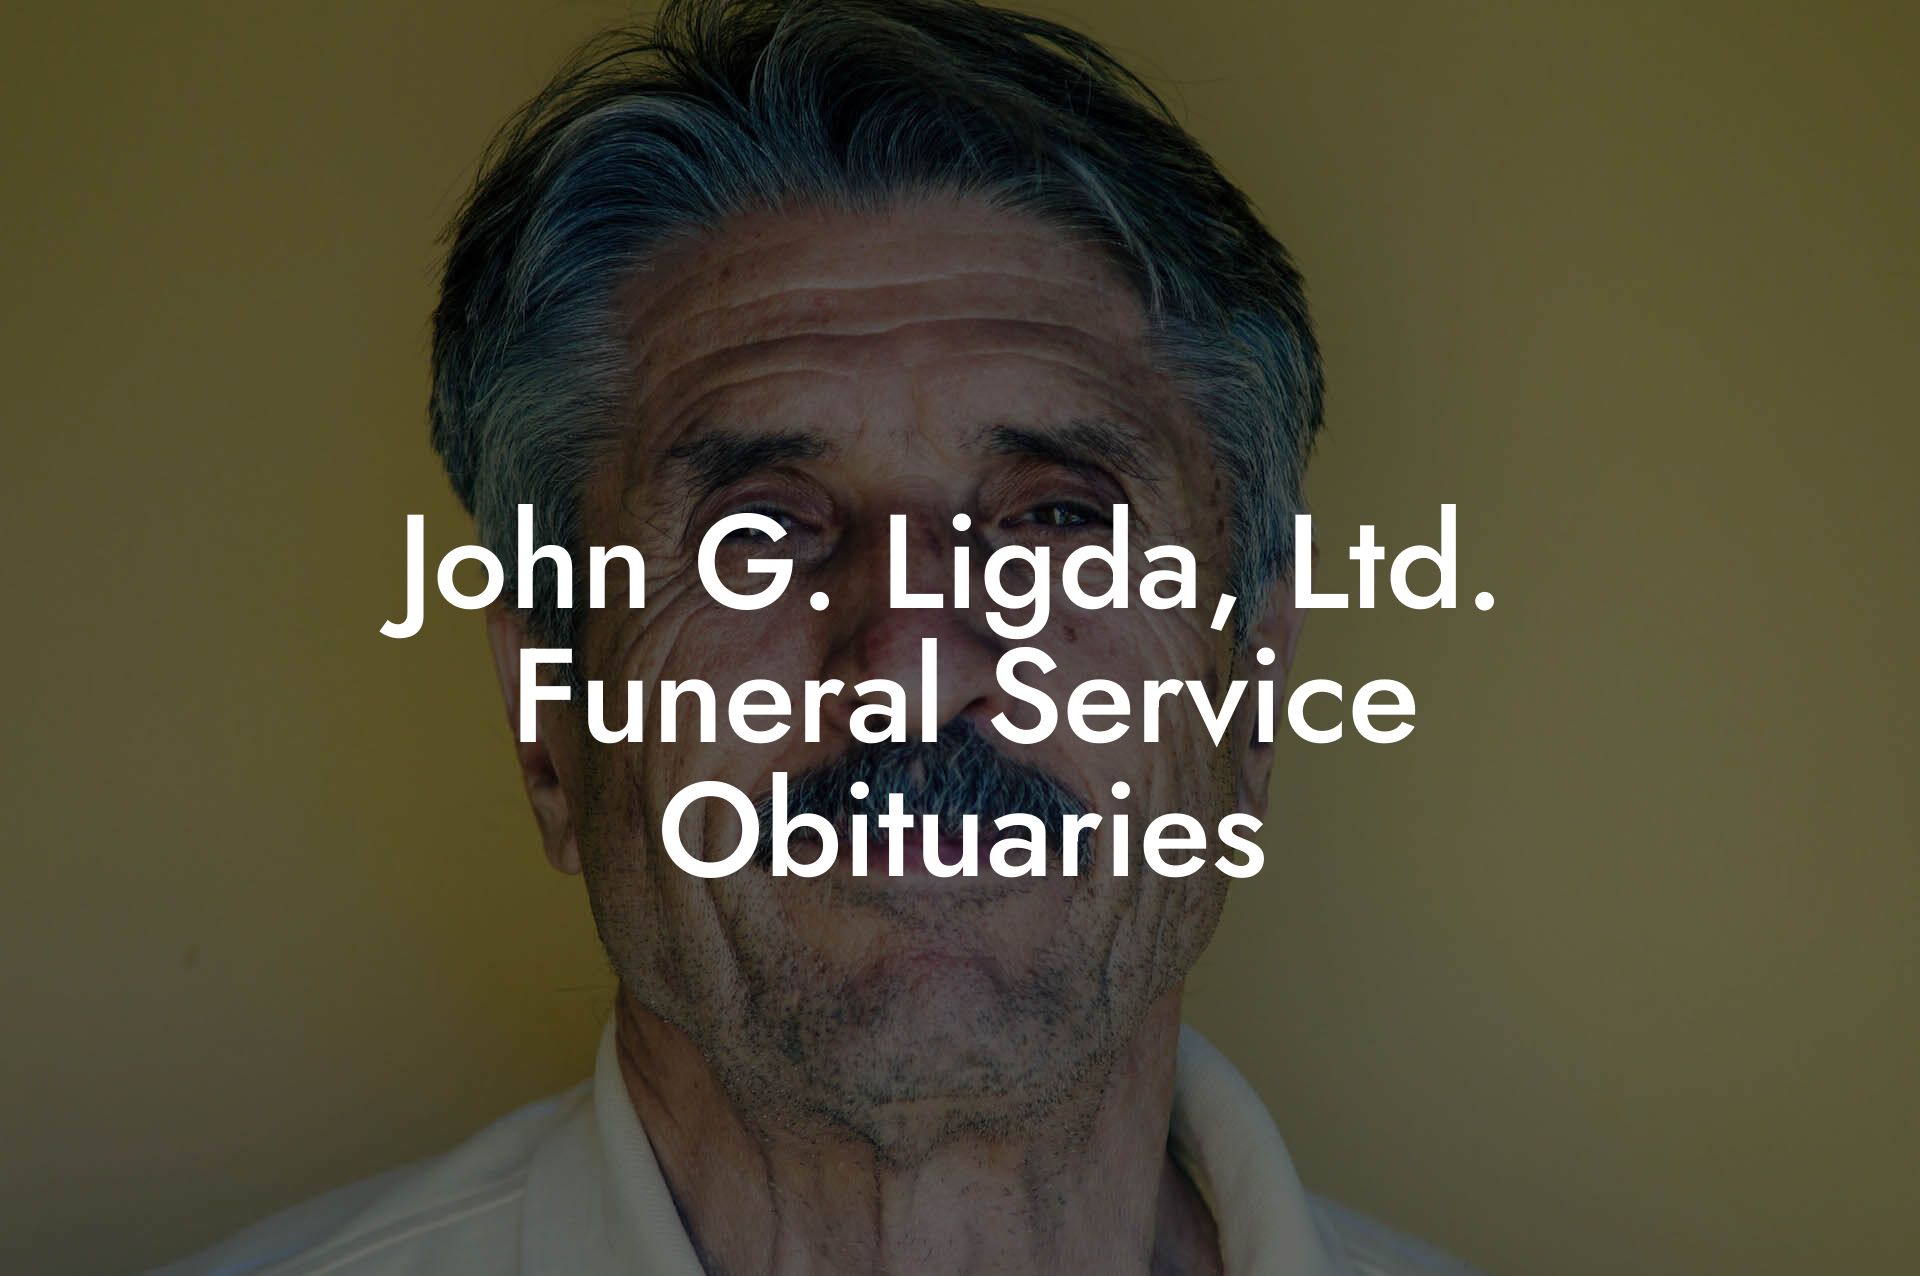 John G. Ligda, Ltd. Funeral Service Obituaries